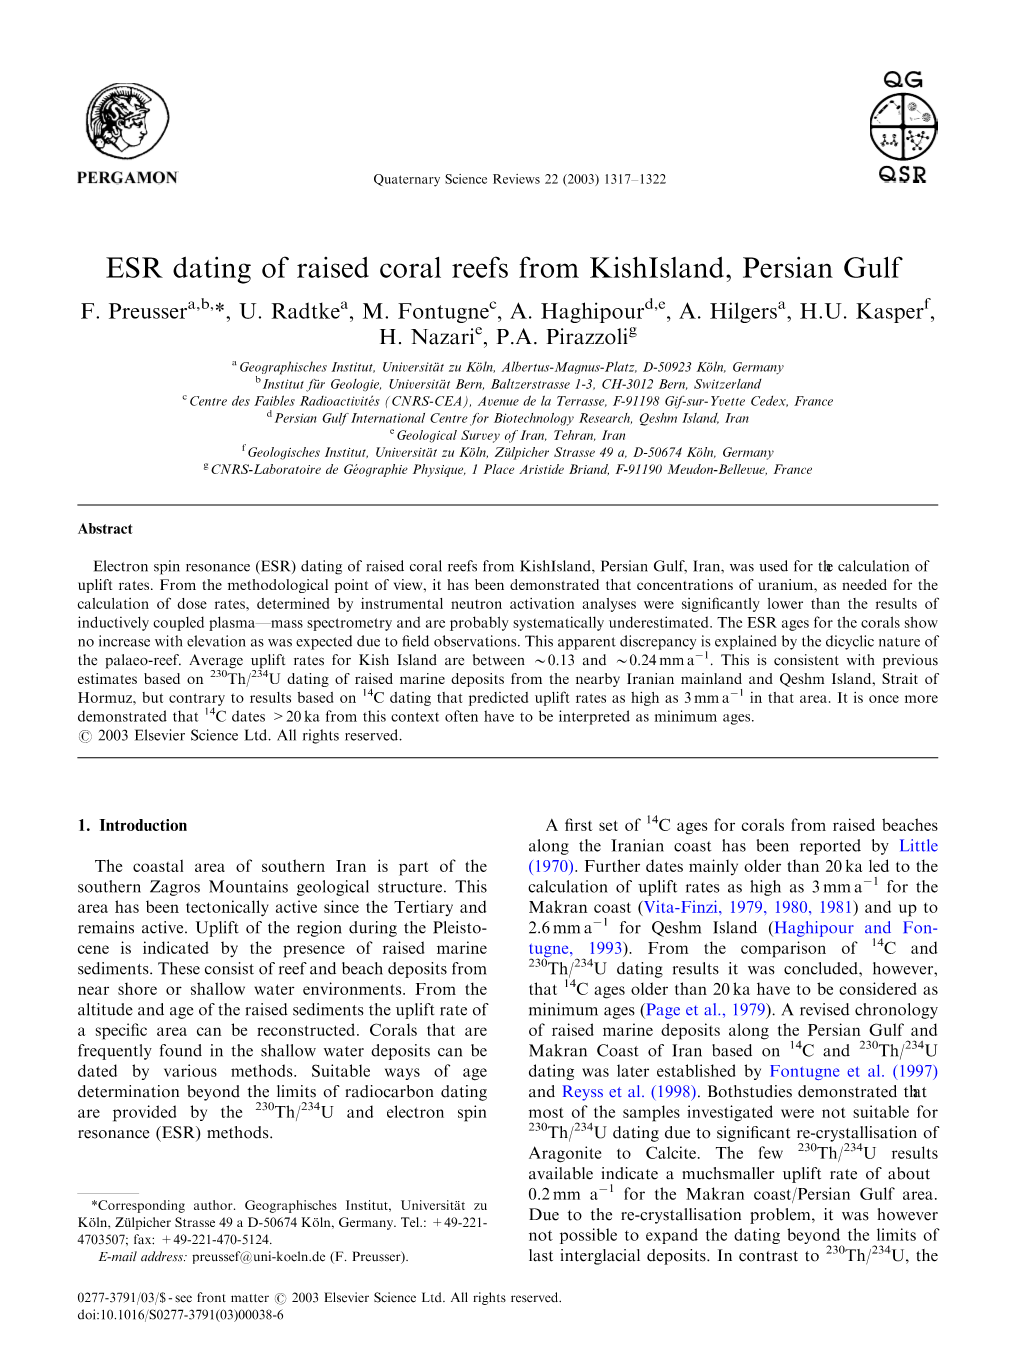 ESR Dating of Raised Coral Reefs from Kish Island, Persian Gulf